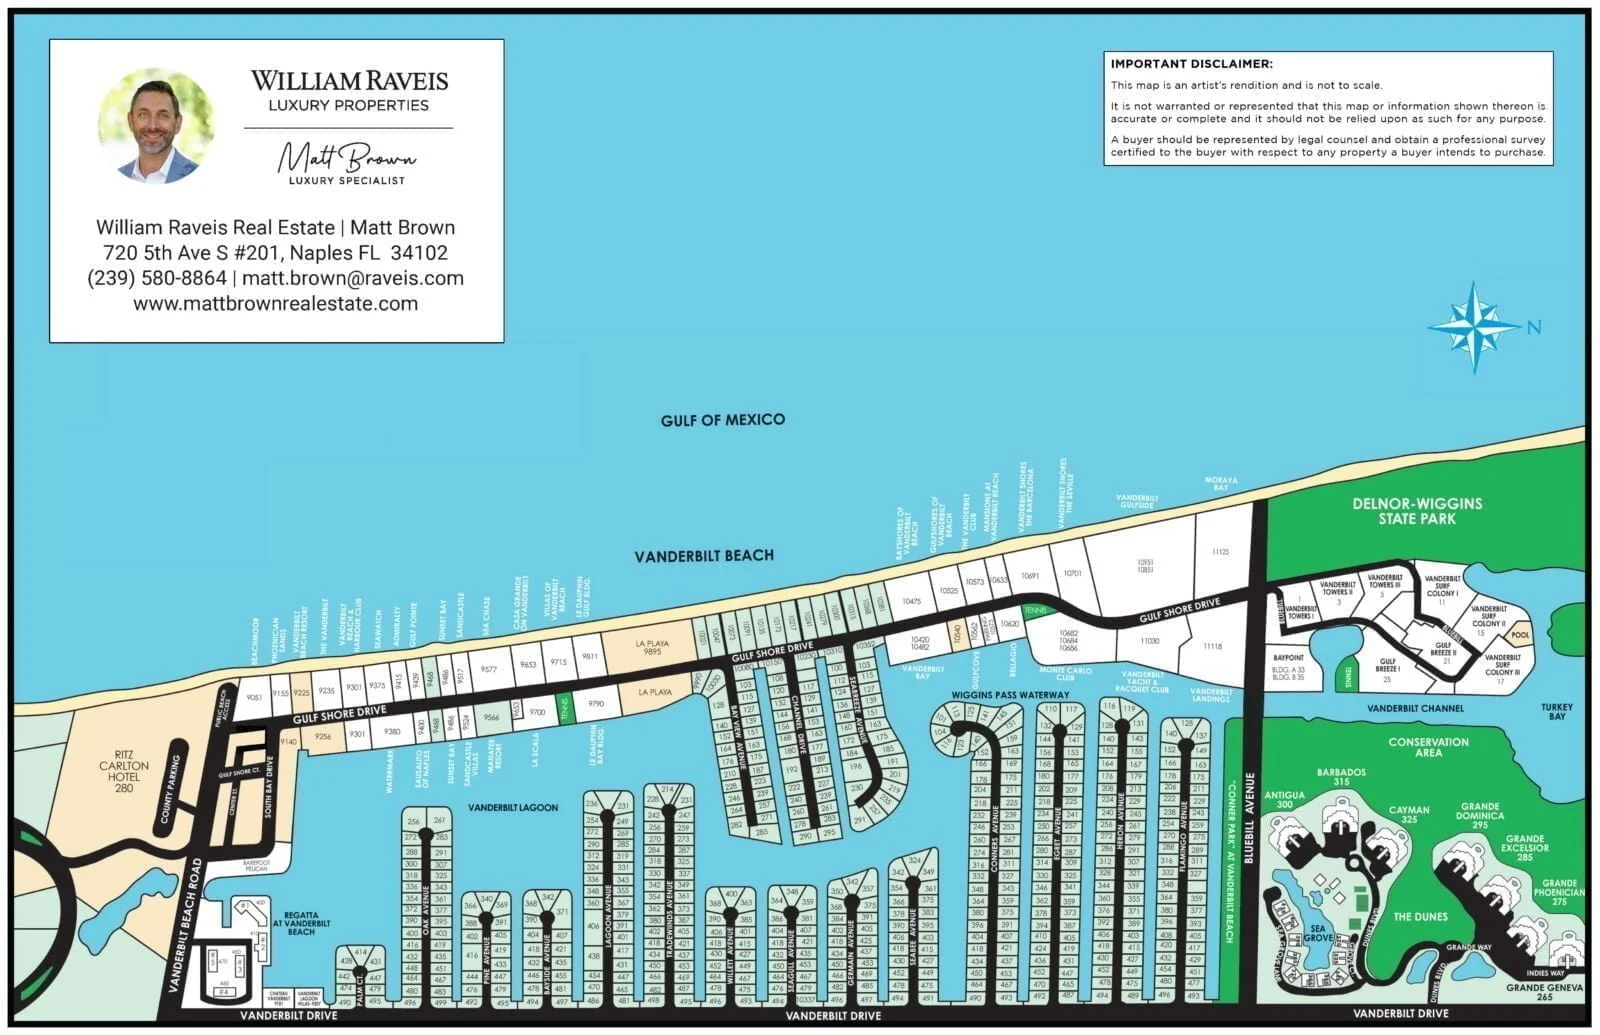 Sitemap of Vanderbilt Beach Condos for sale in Naples, Florida